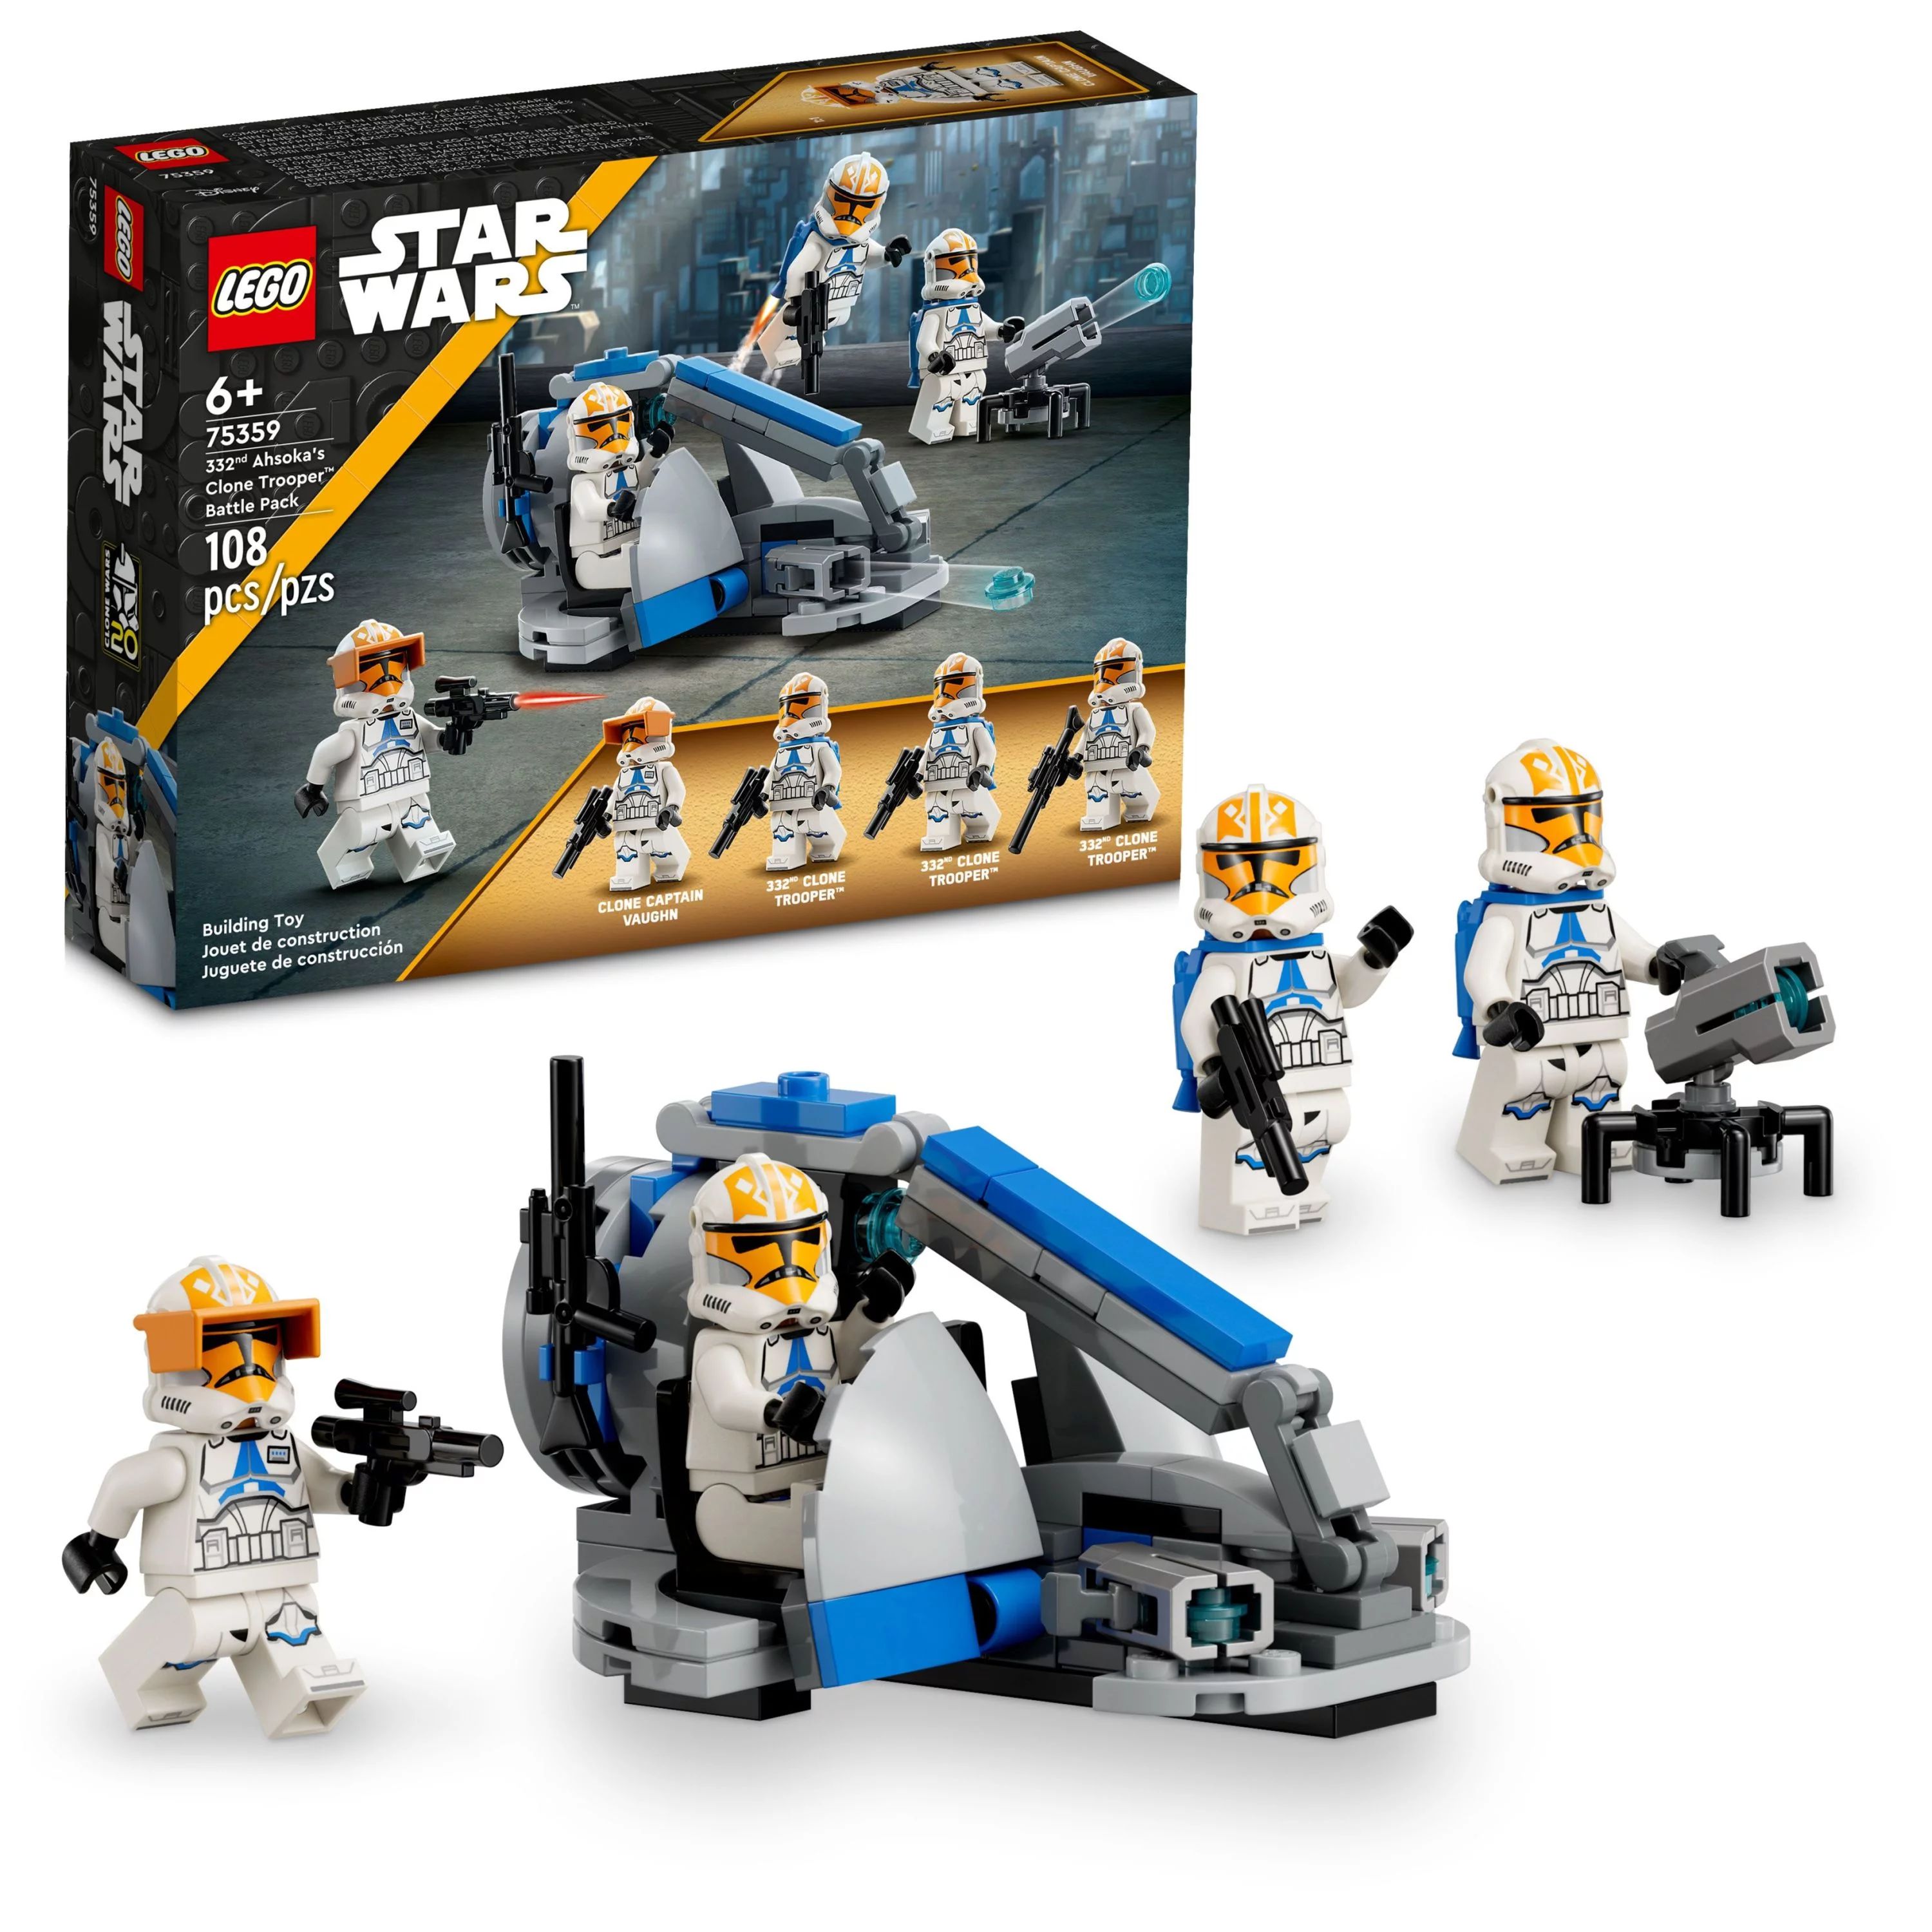 LEGO Star Wars 332nd Ahsoka’s Clone Trooper Battle Pack 75359 Building Toy Set with 4 Star Wars... | Walmart (US)